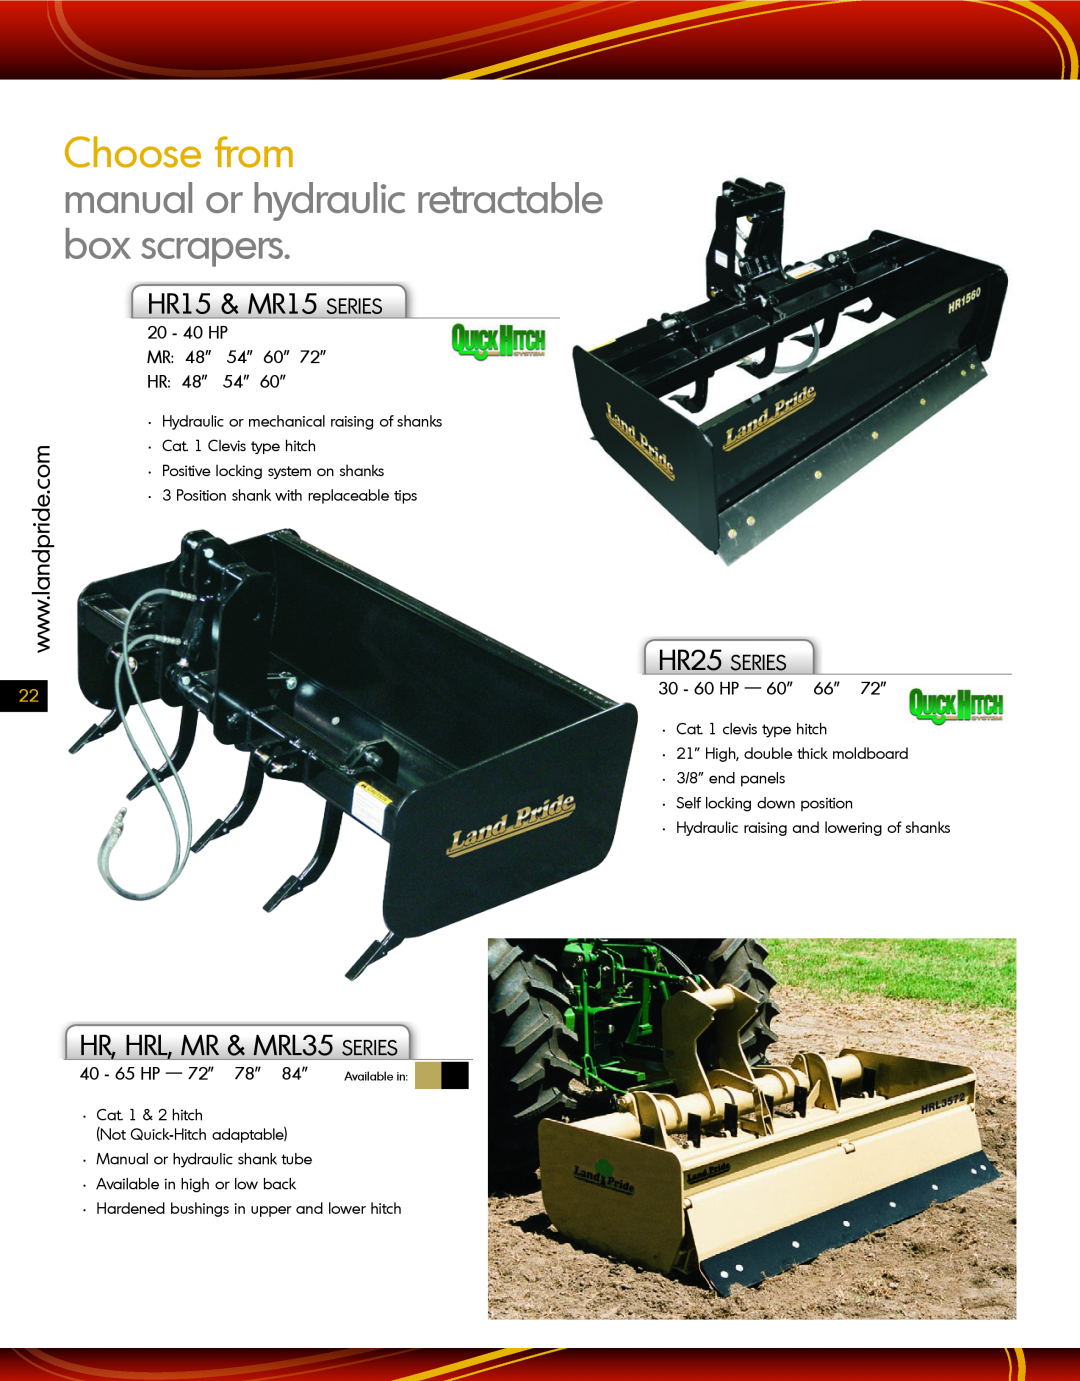 Land Pride manual Choose from, manual or hydraulic retractable box scrapers, HR15 & MR15 SERIES, HR25 SERIES, MR 48” 